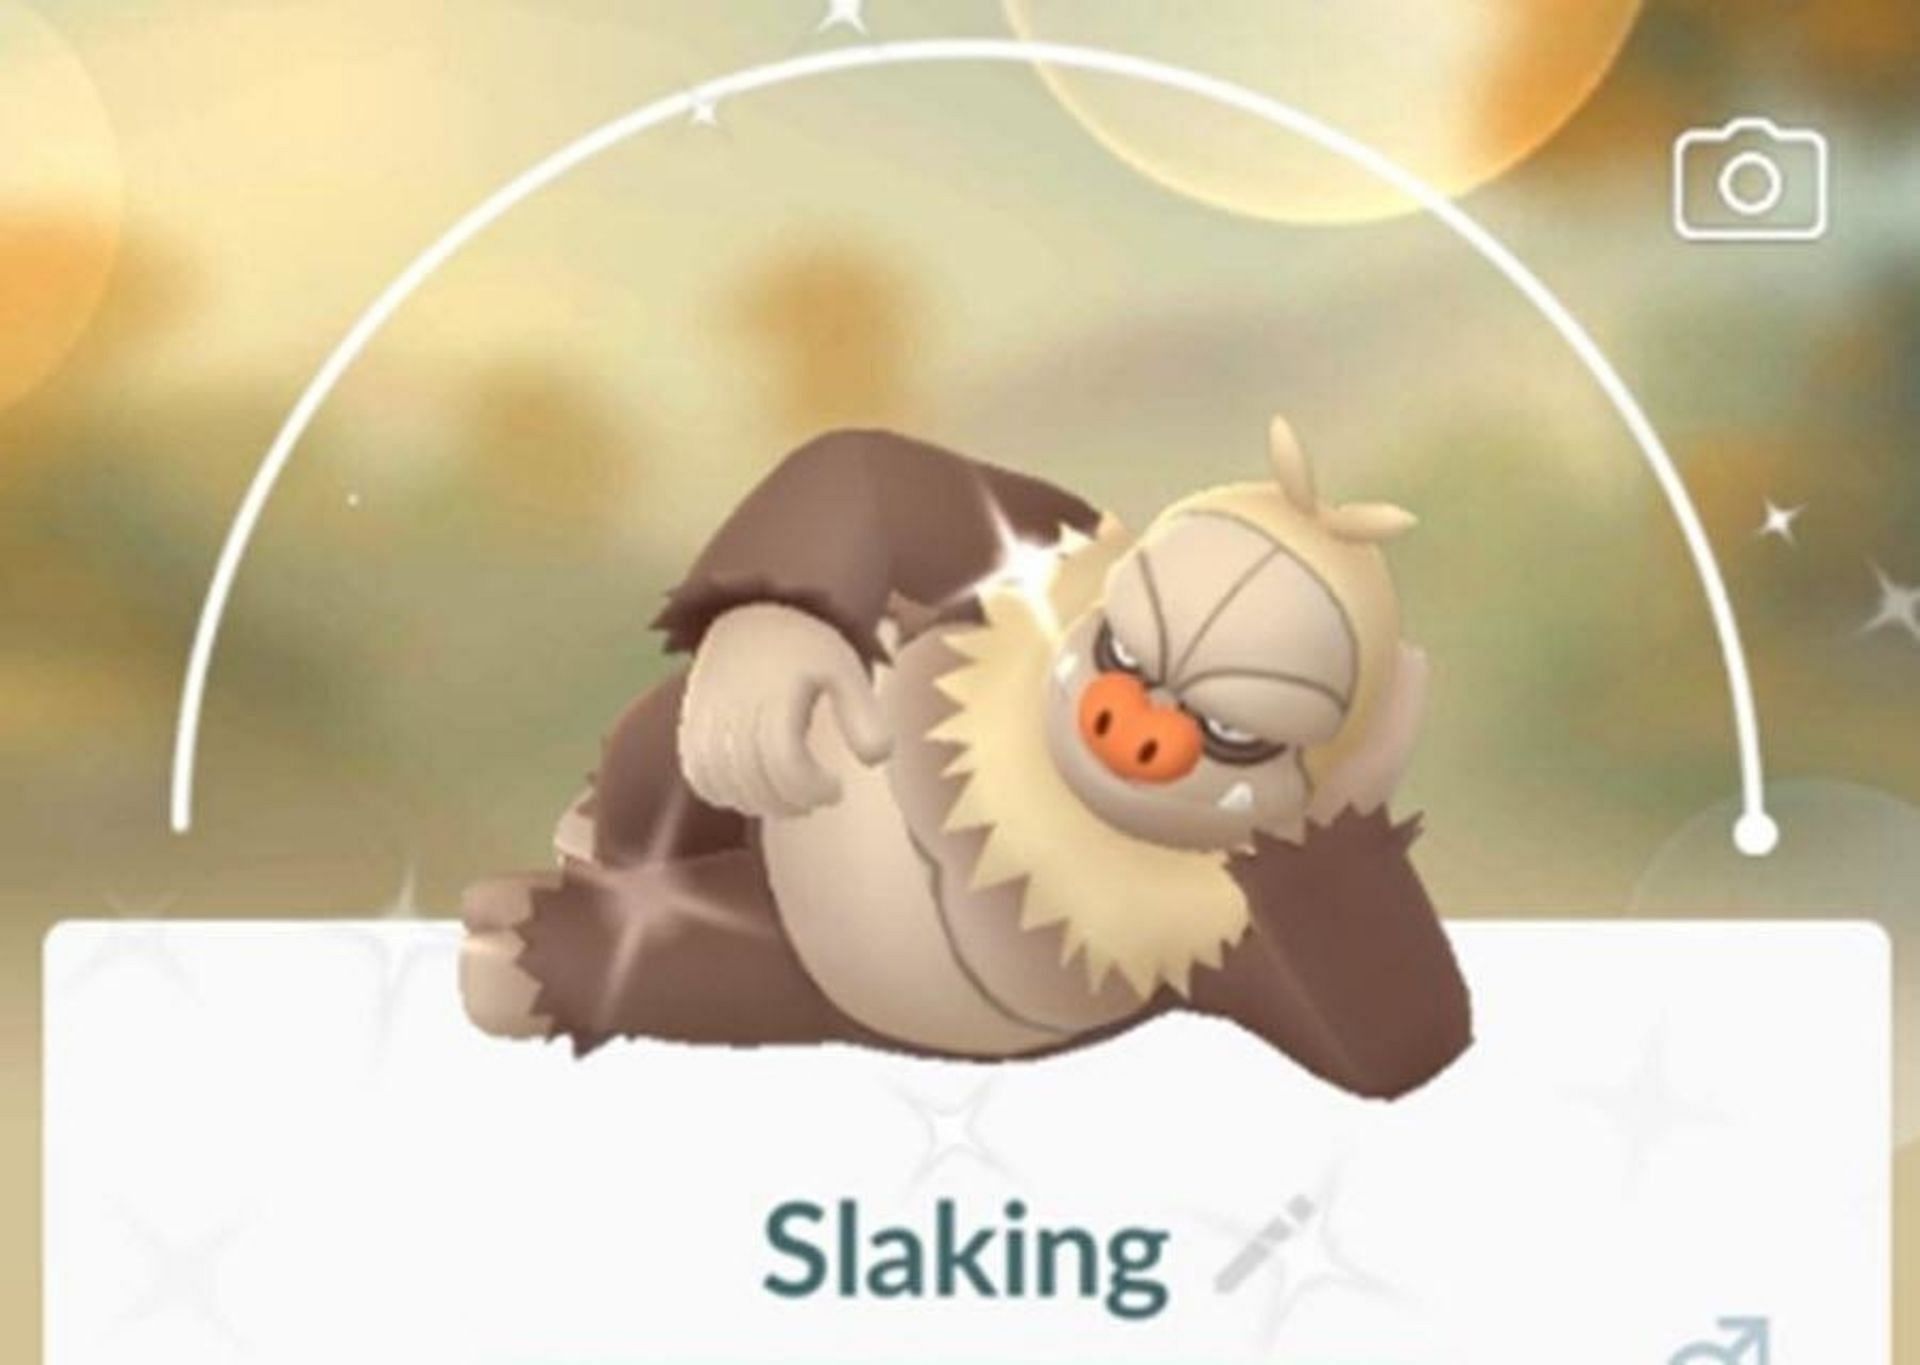 How to catch Slaking in Pokemon Go